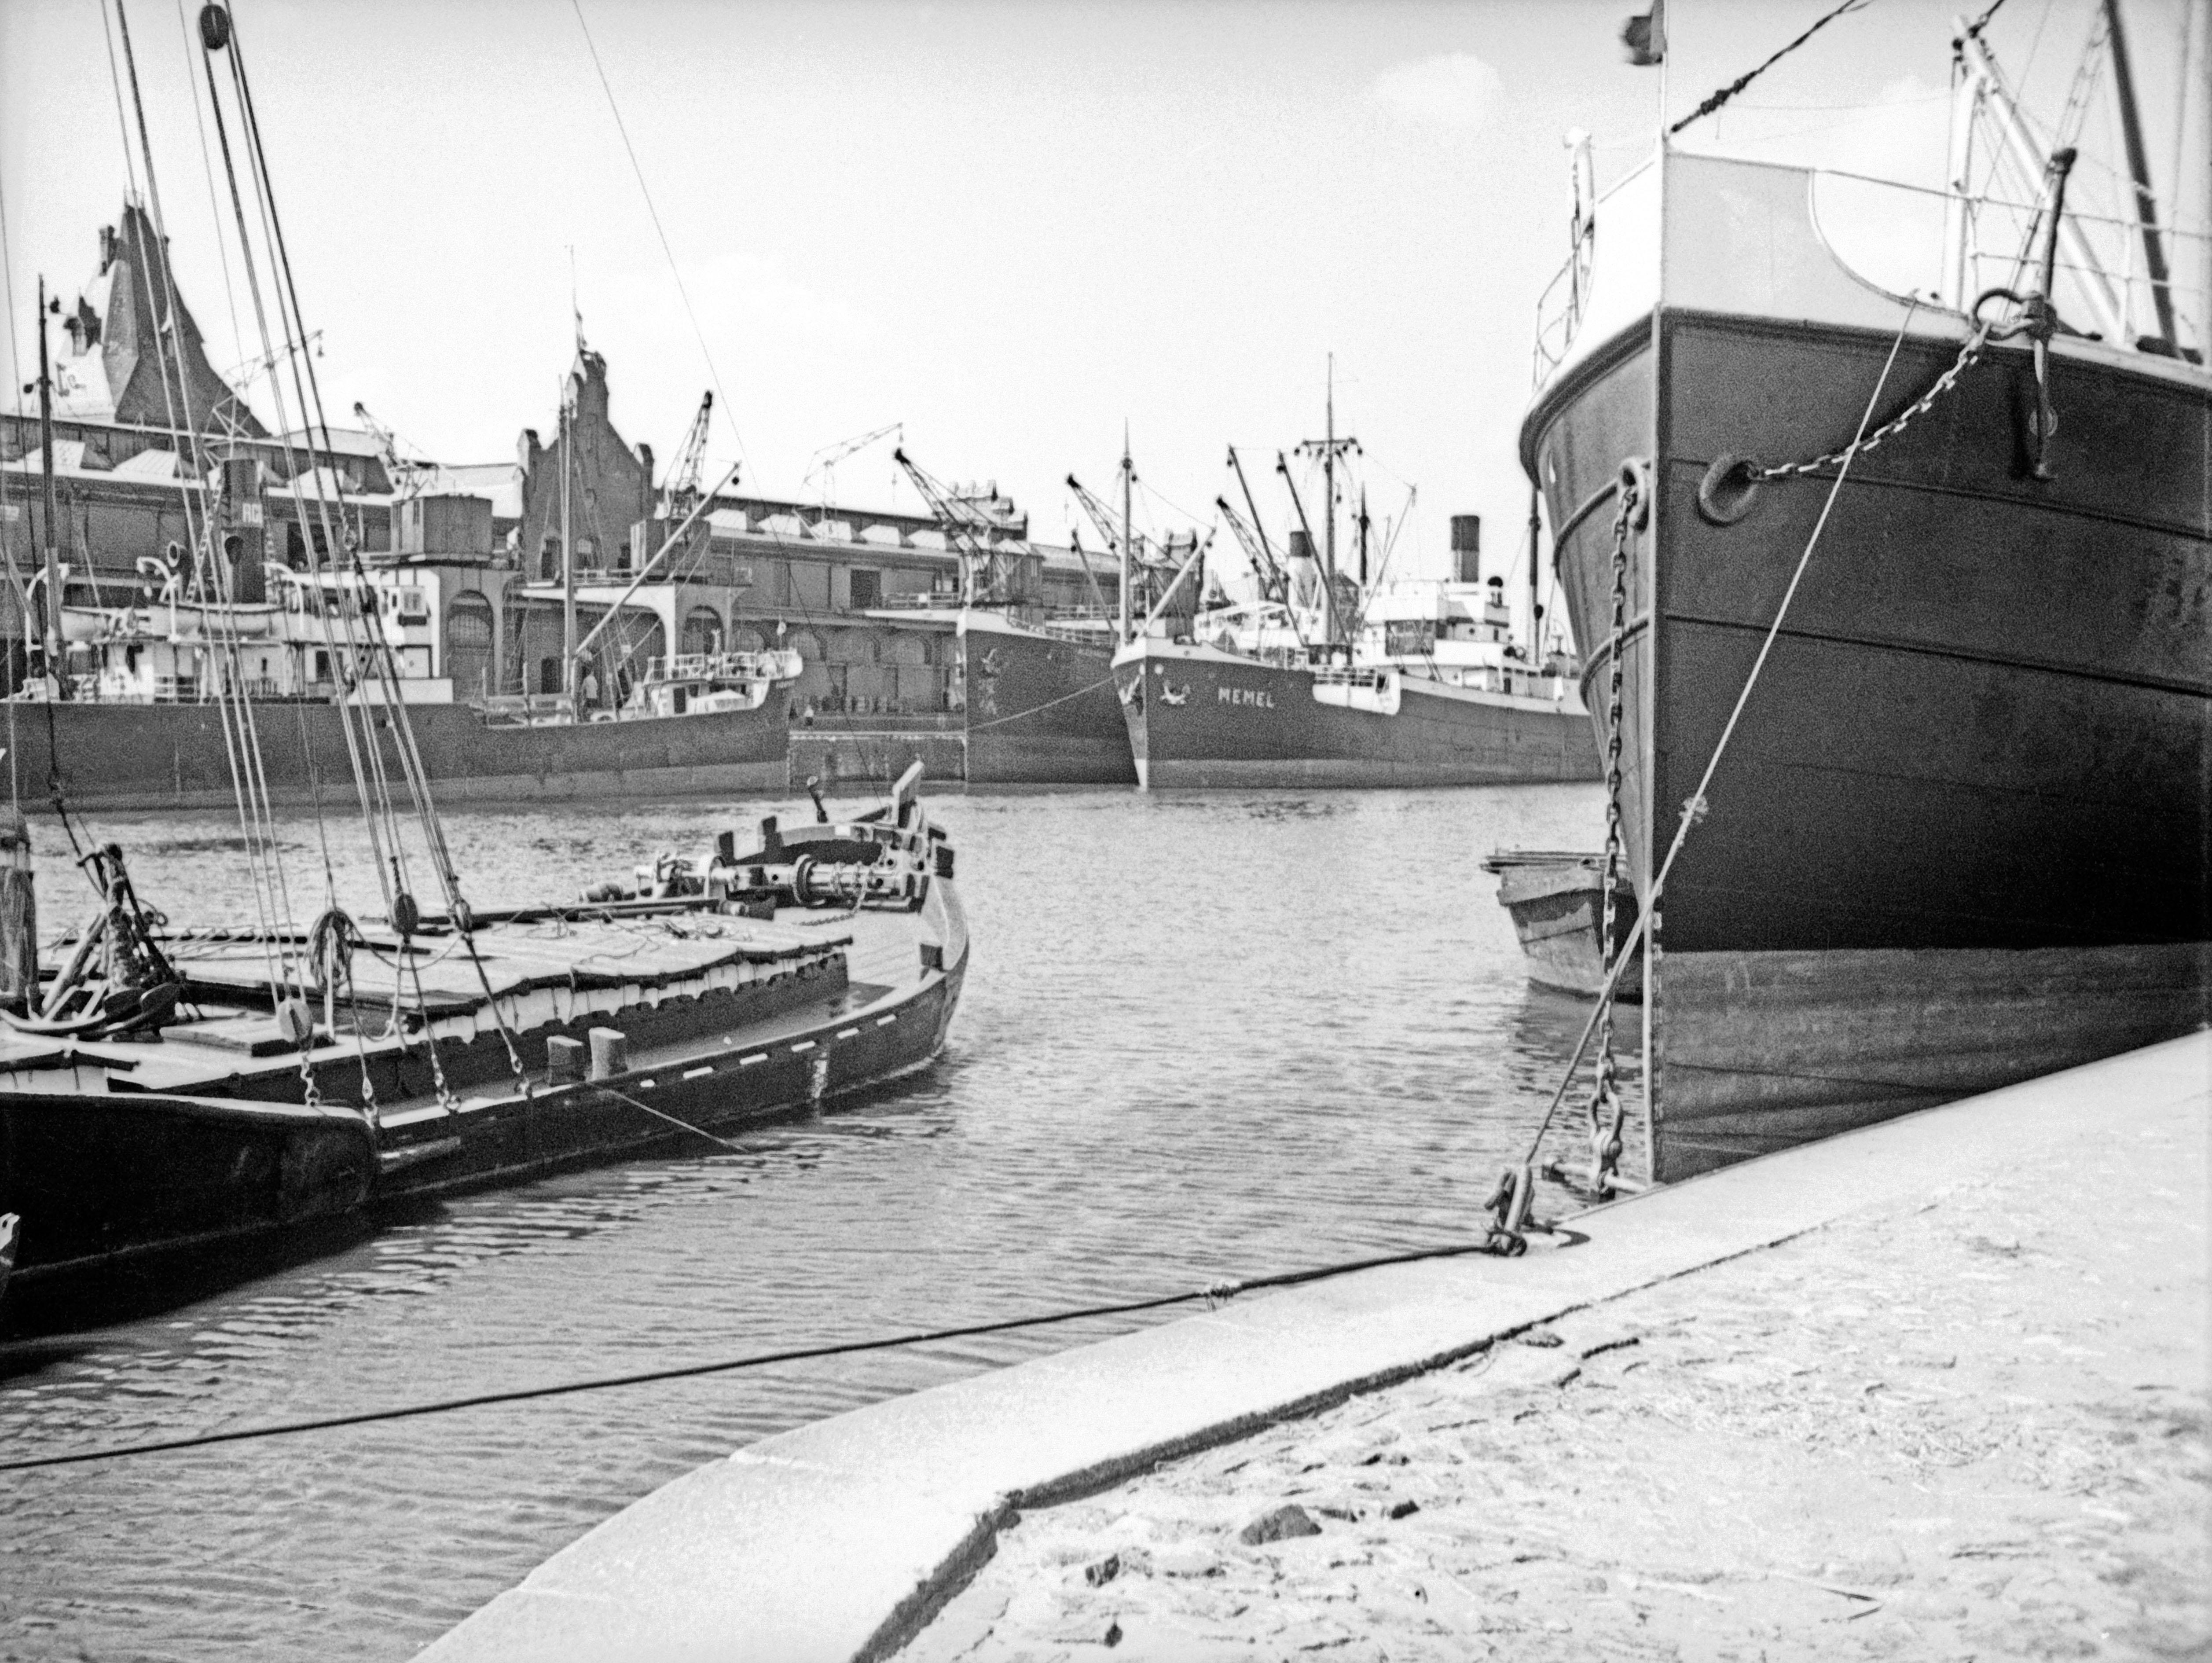 Black and White Photograph Karl Heinrich Lämmel - Ships at the inner harbor of Koenigsberg, Allemagne 1934 Imprimé plus tard 